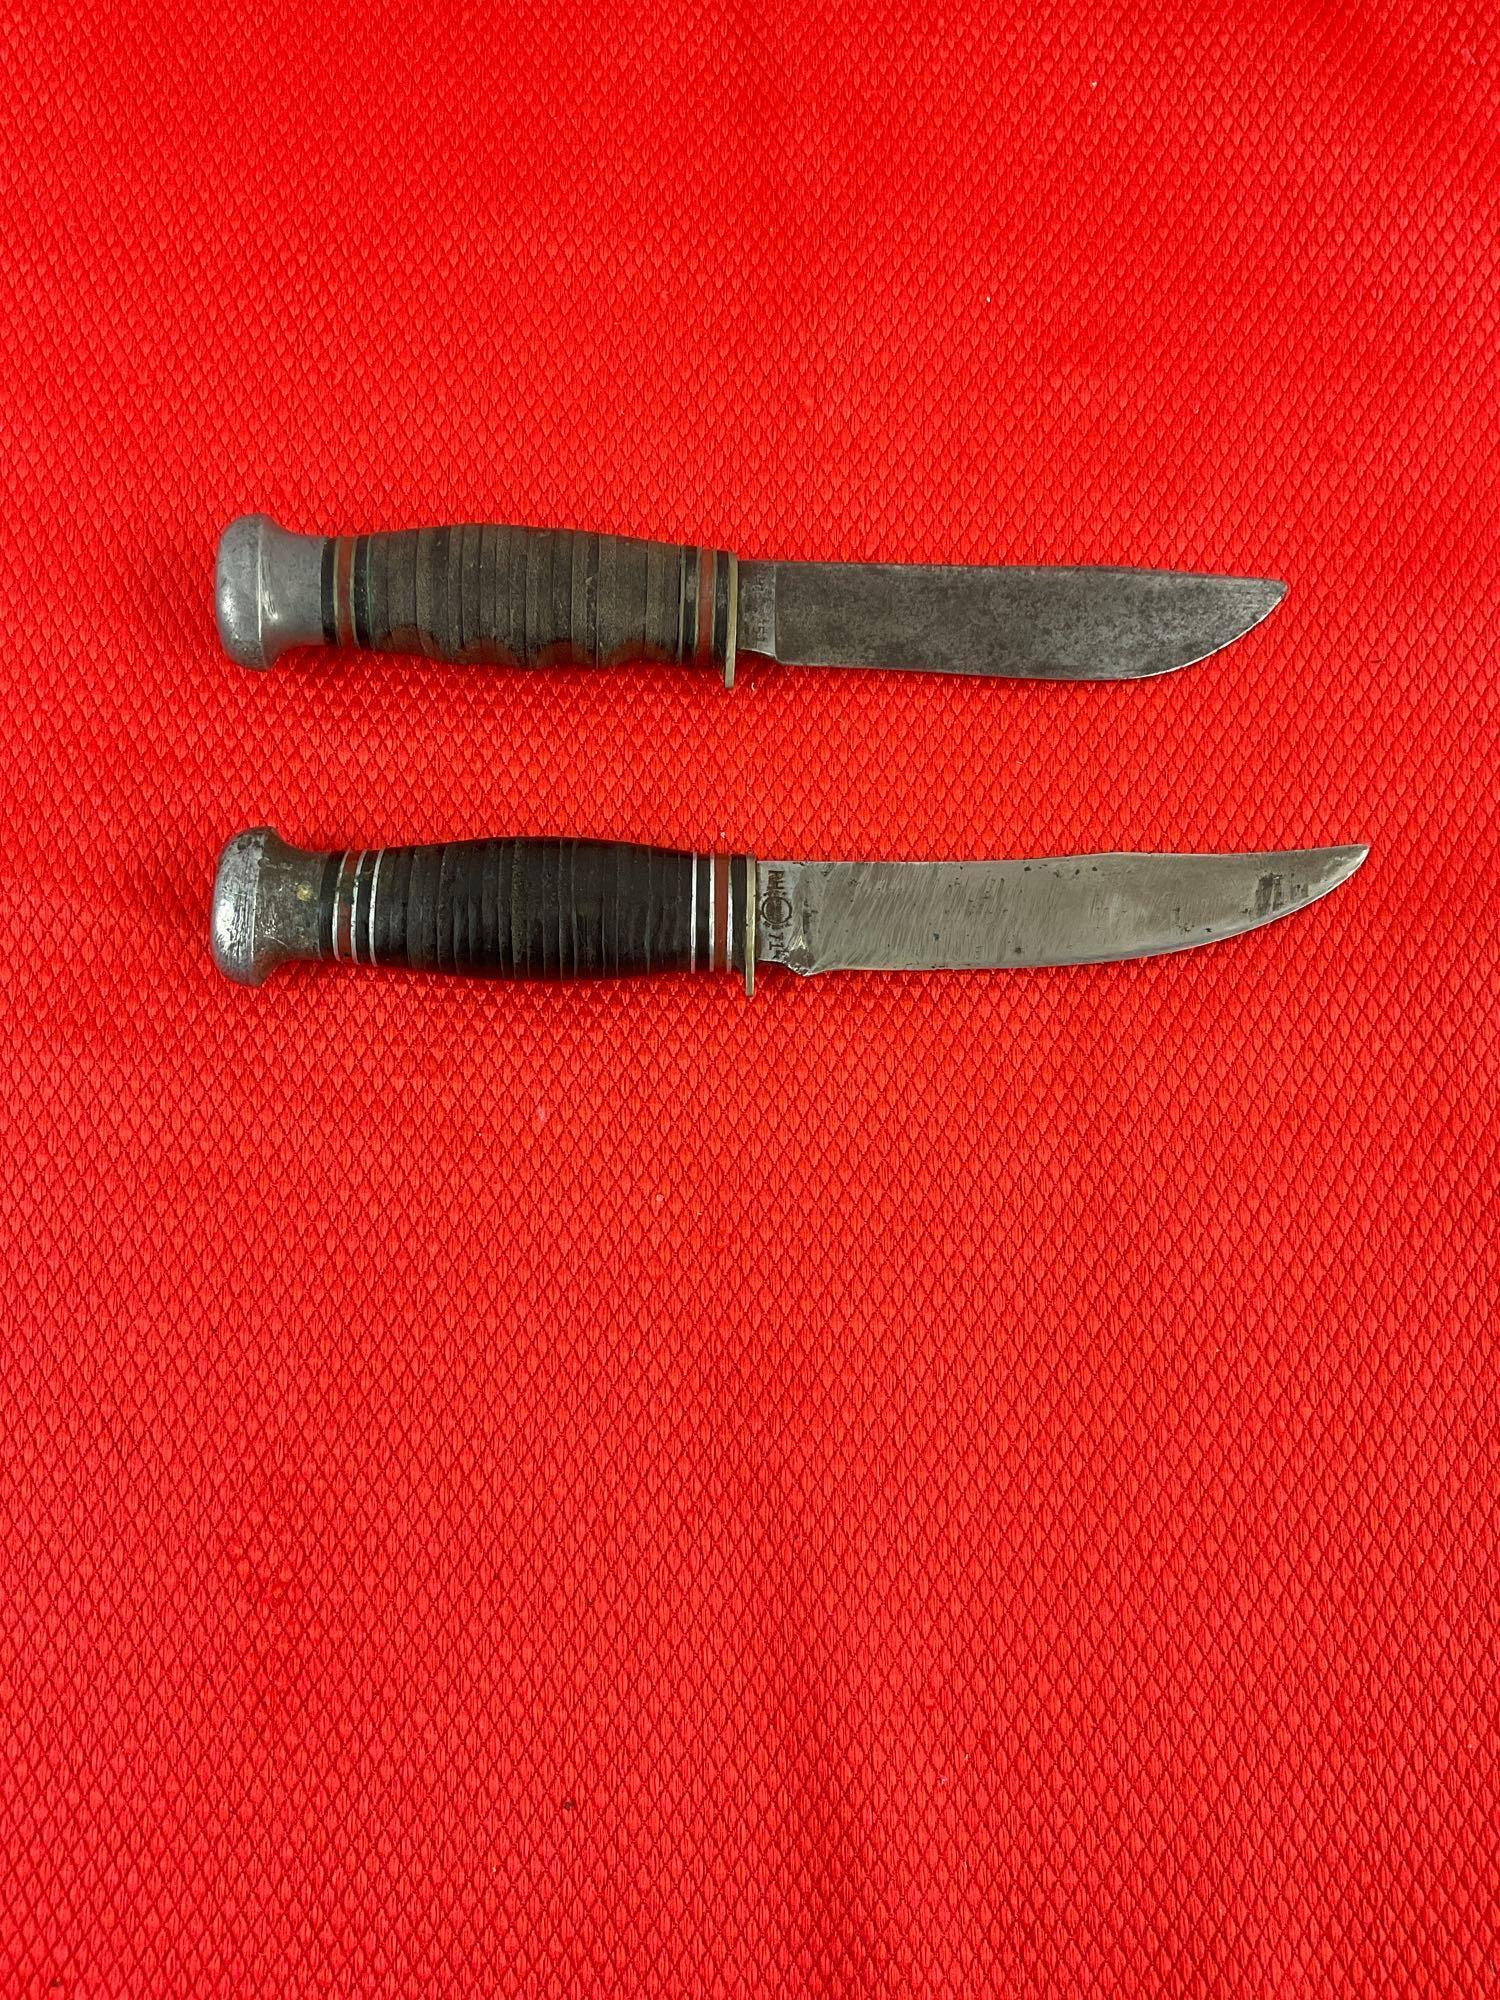 2 pcs Vintage Remington DuPont Collectible Fixed Blade Knives Models RH51 & RH71 w/ Sheaths. See